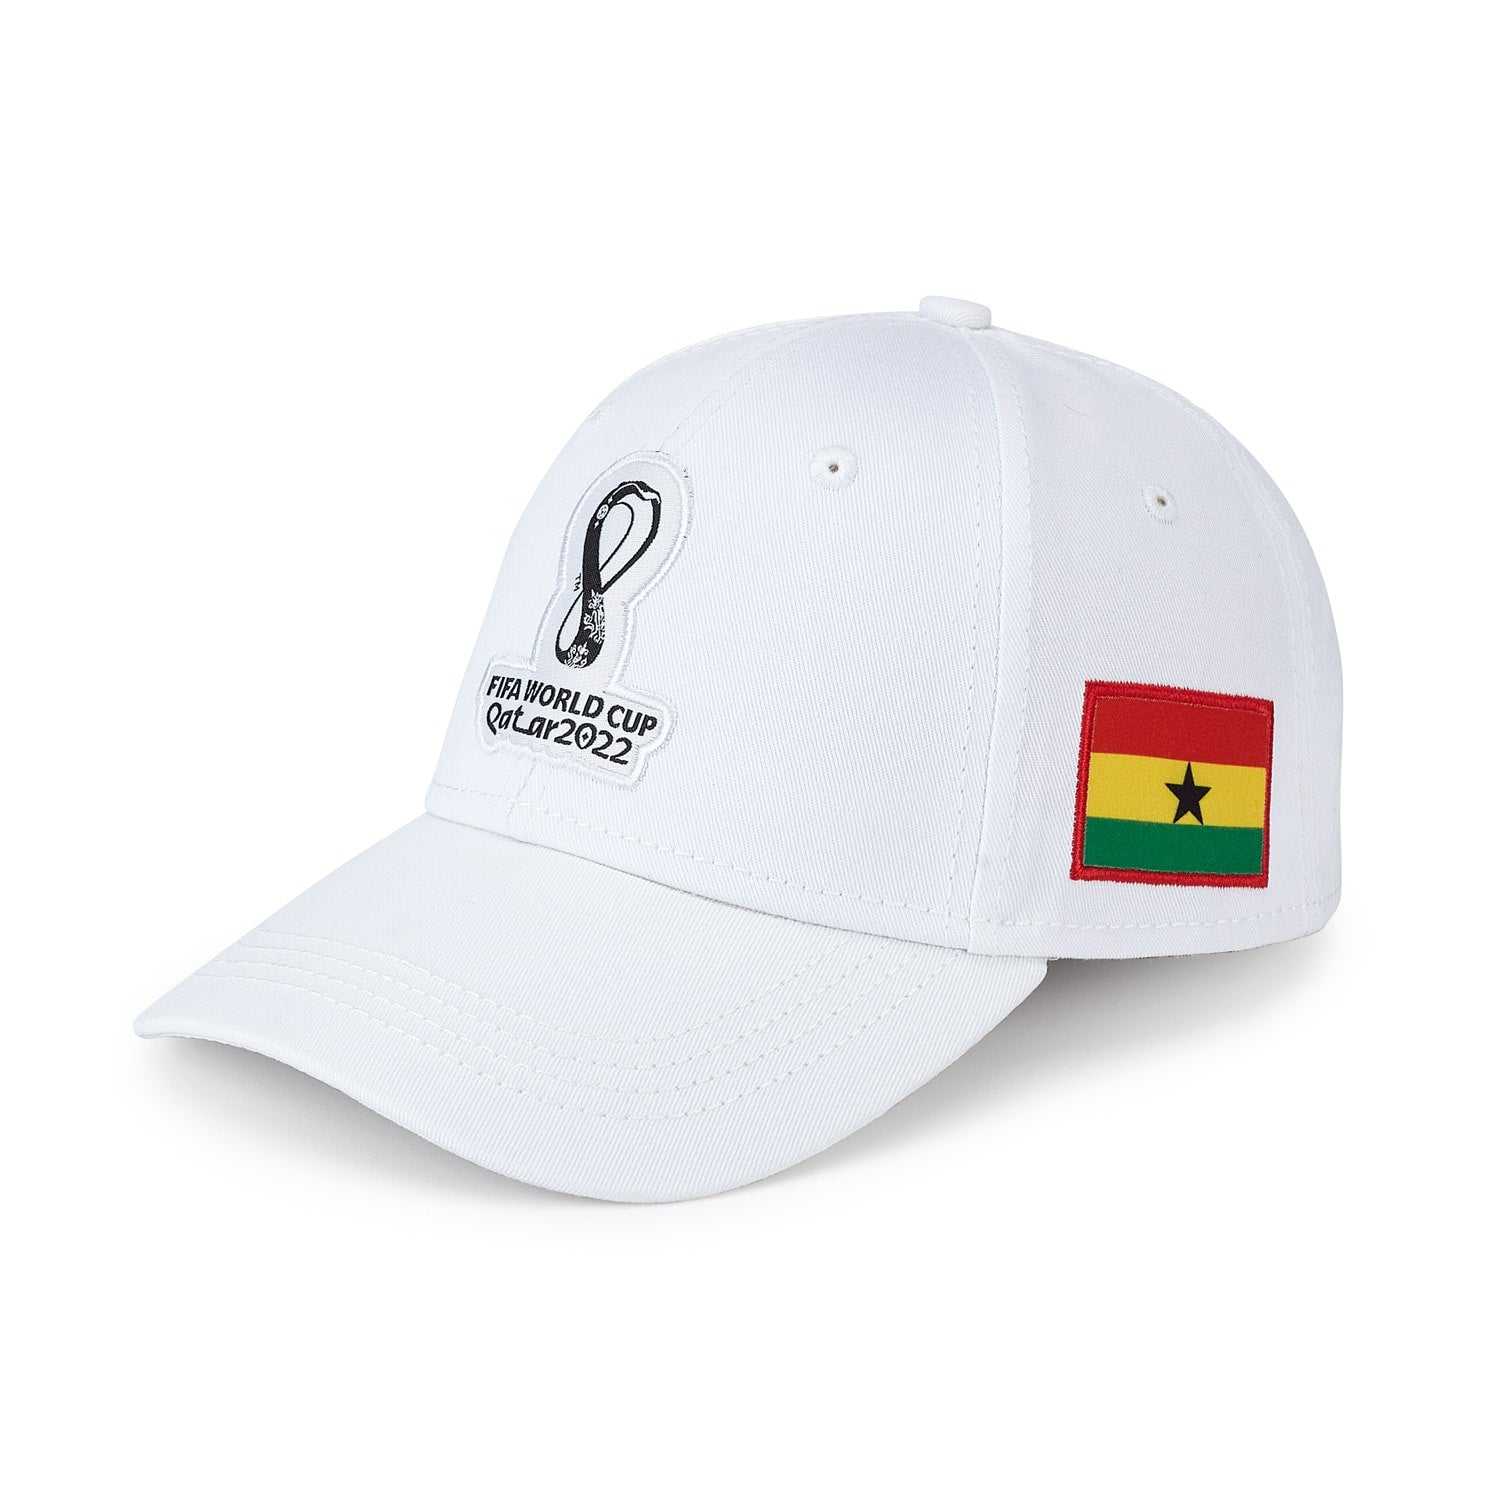 2022 World Cup Ghana White Cap - Mens